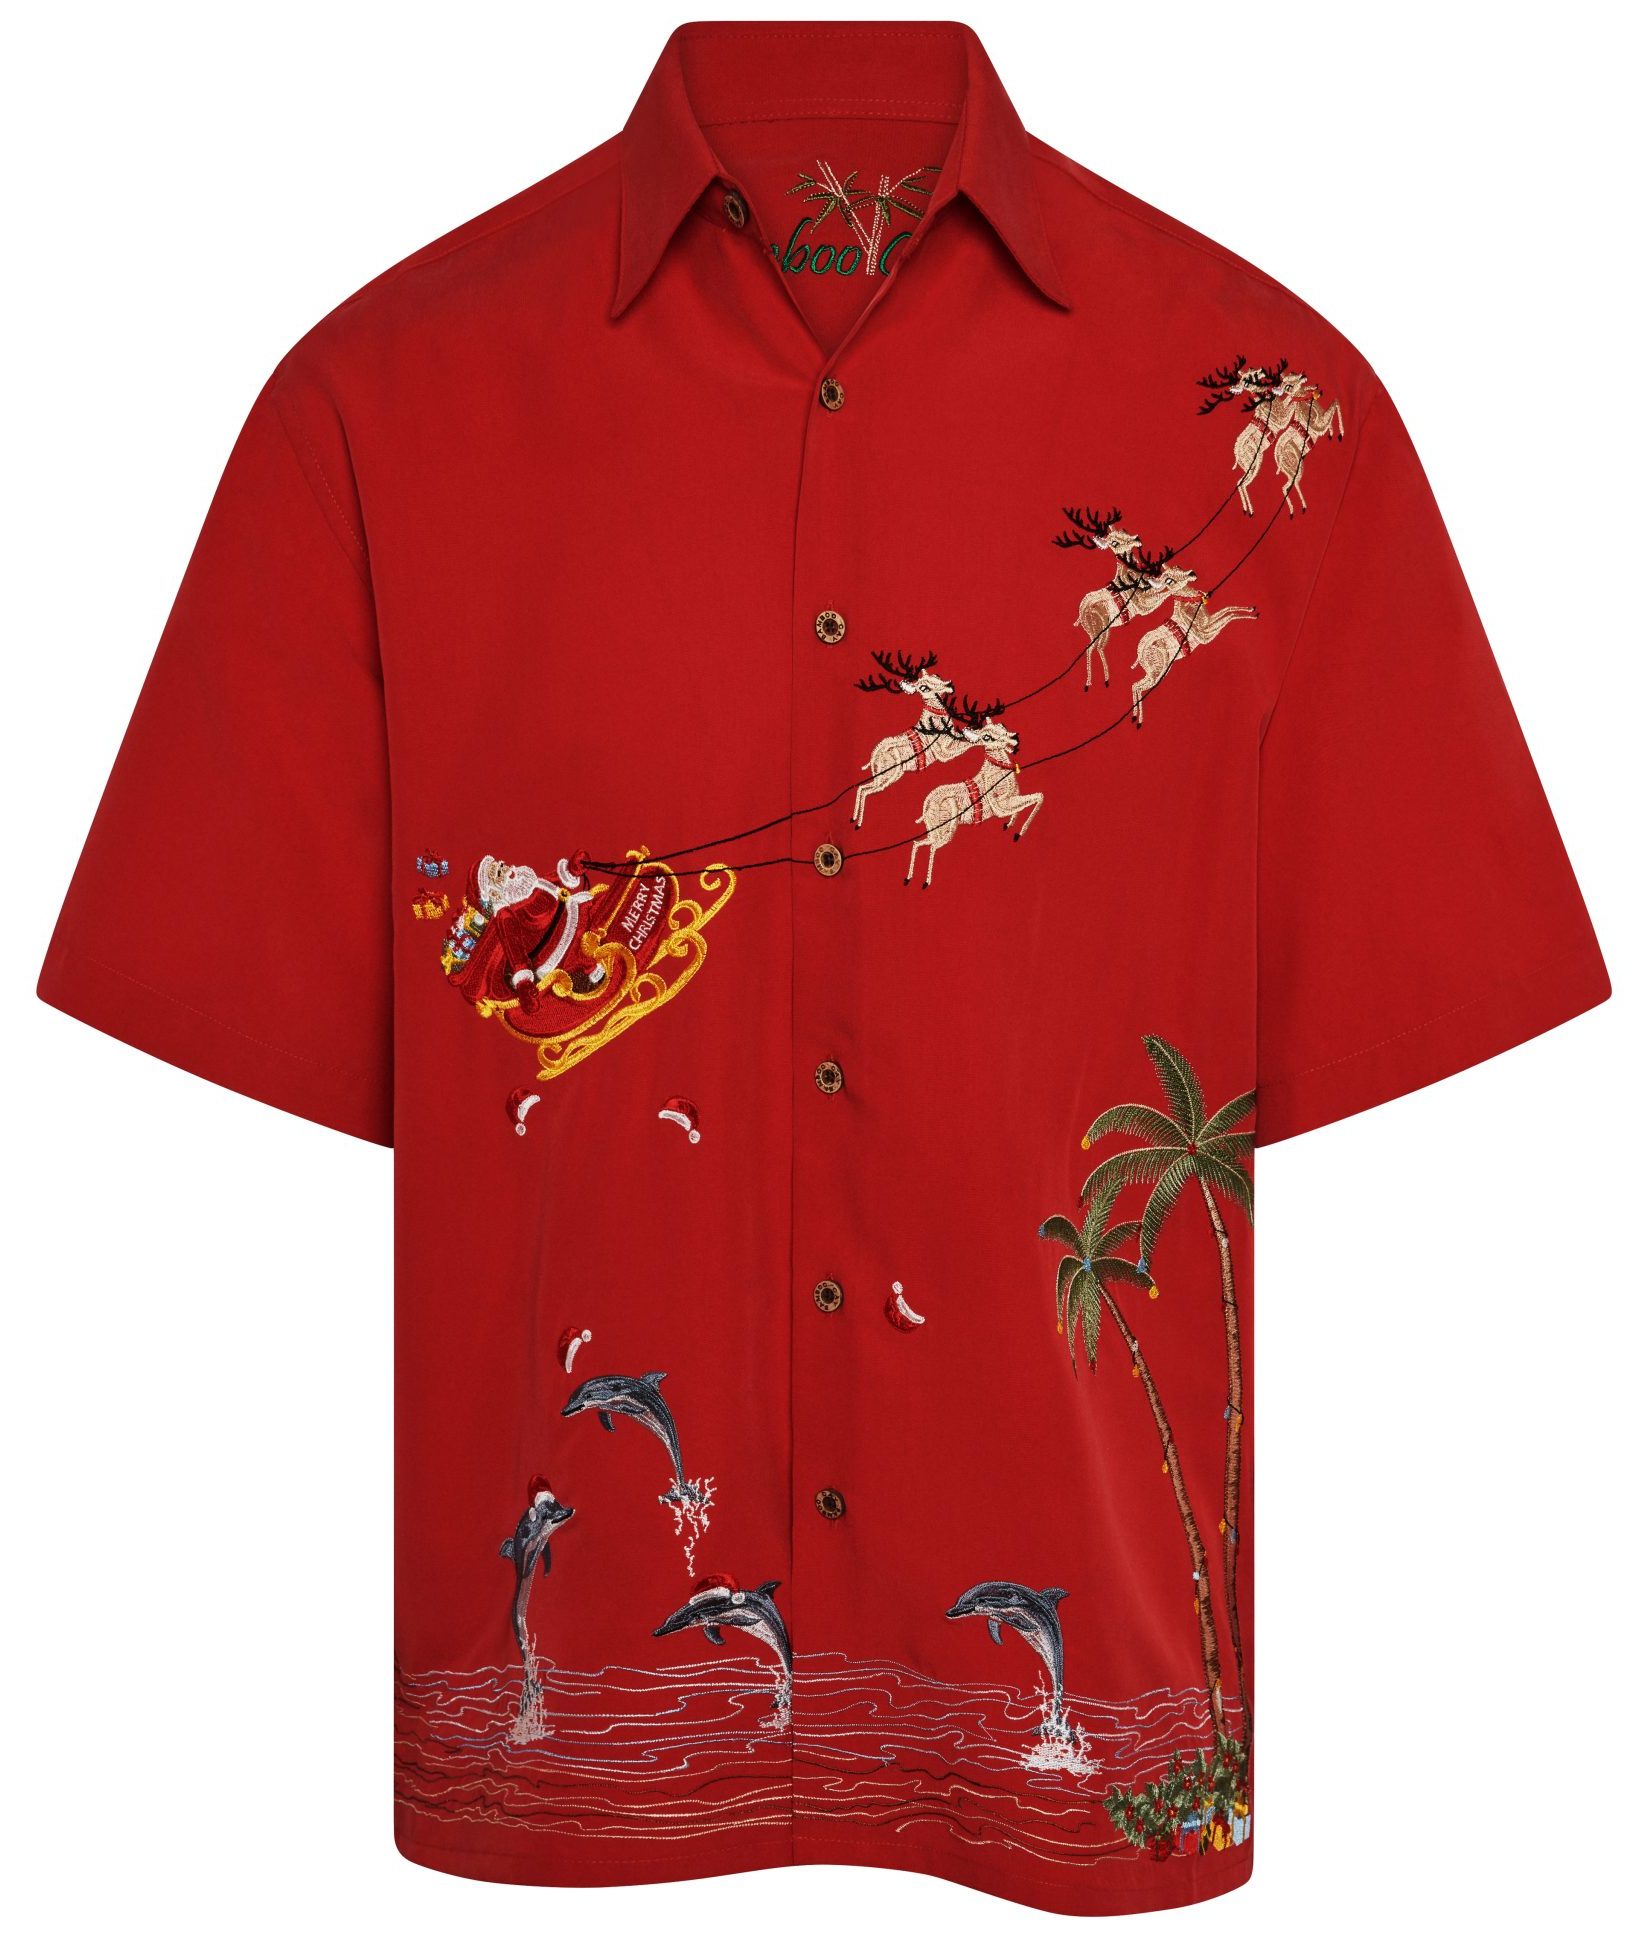 Bamboo Cay Men's Christmas Shirts